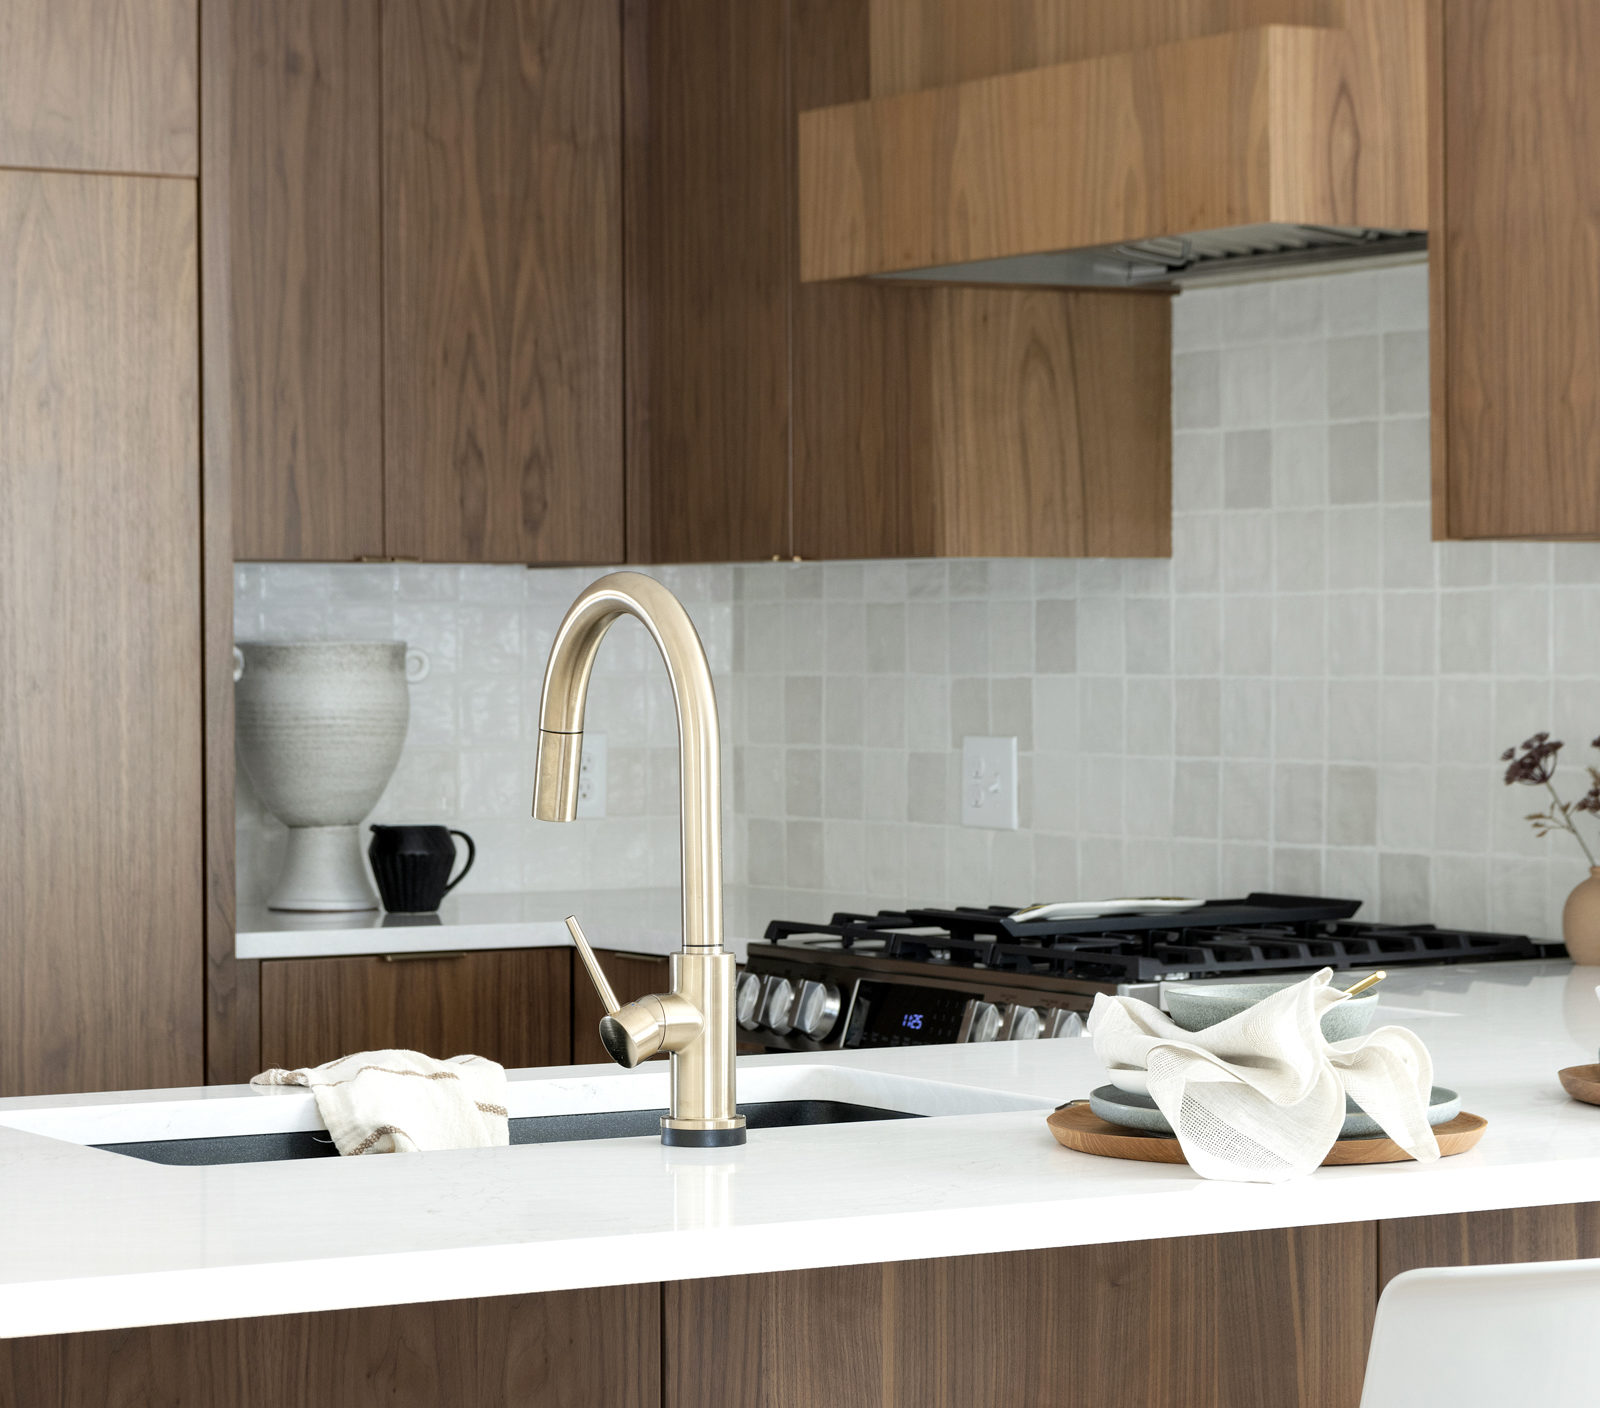 Wooden kitchen cabinet ideas | construction2style